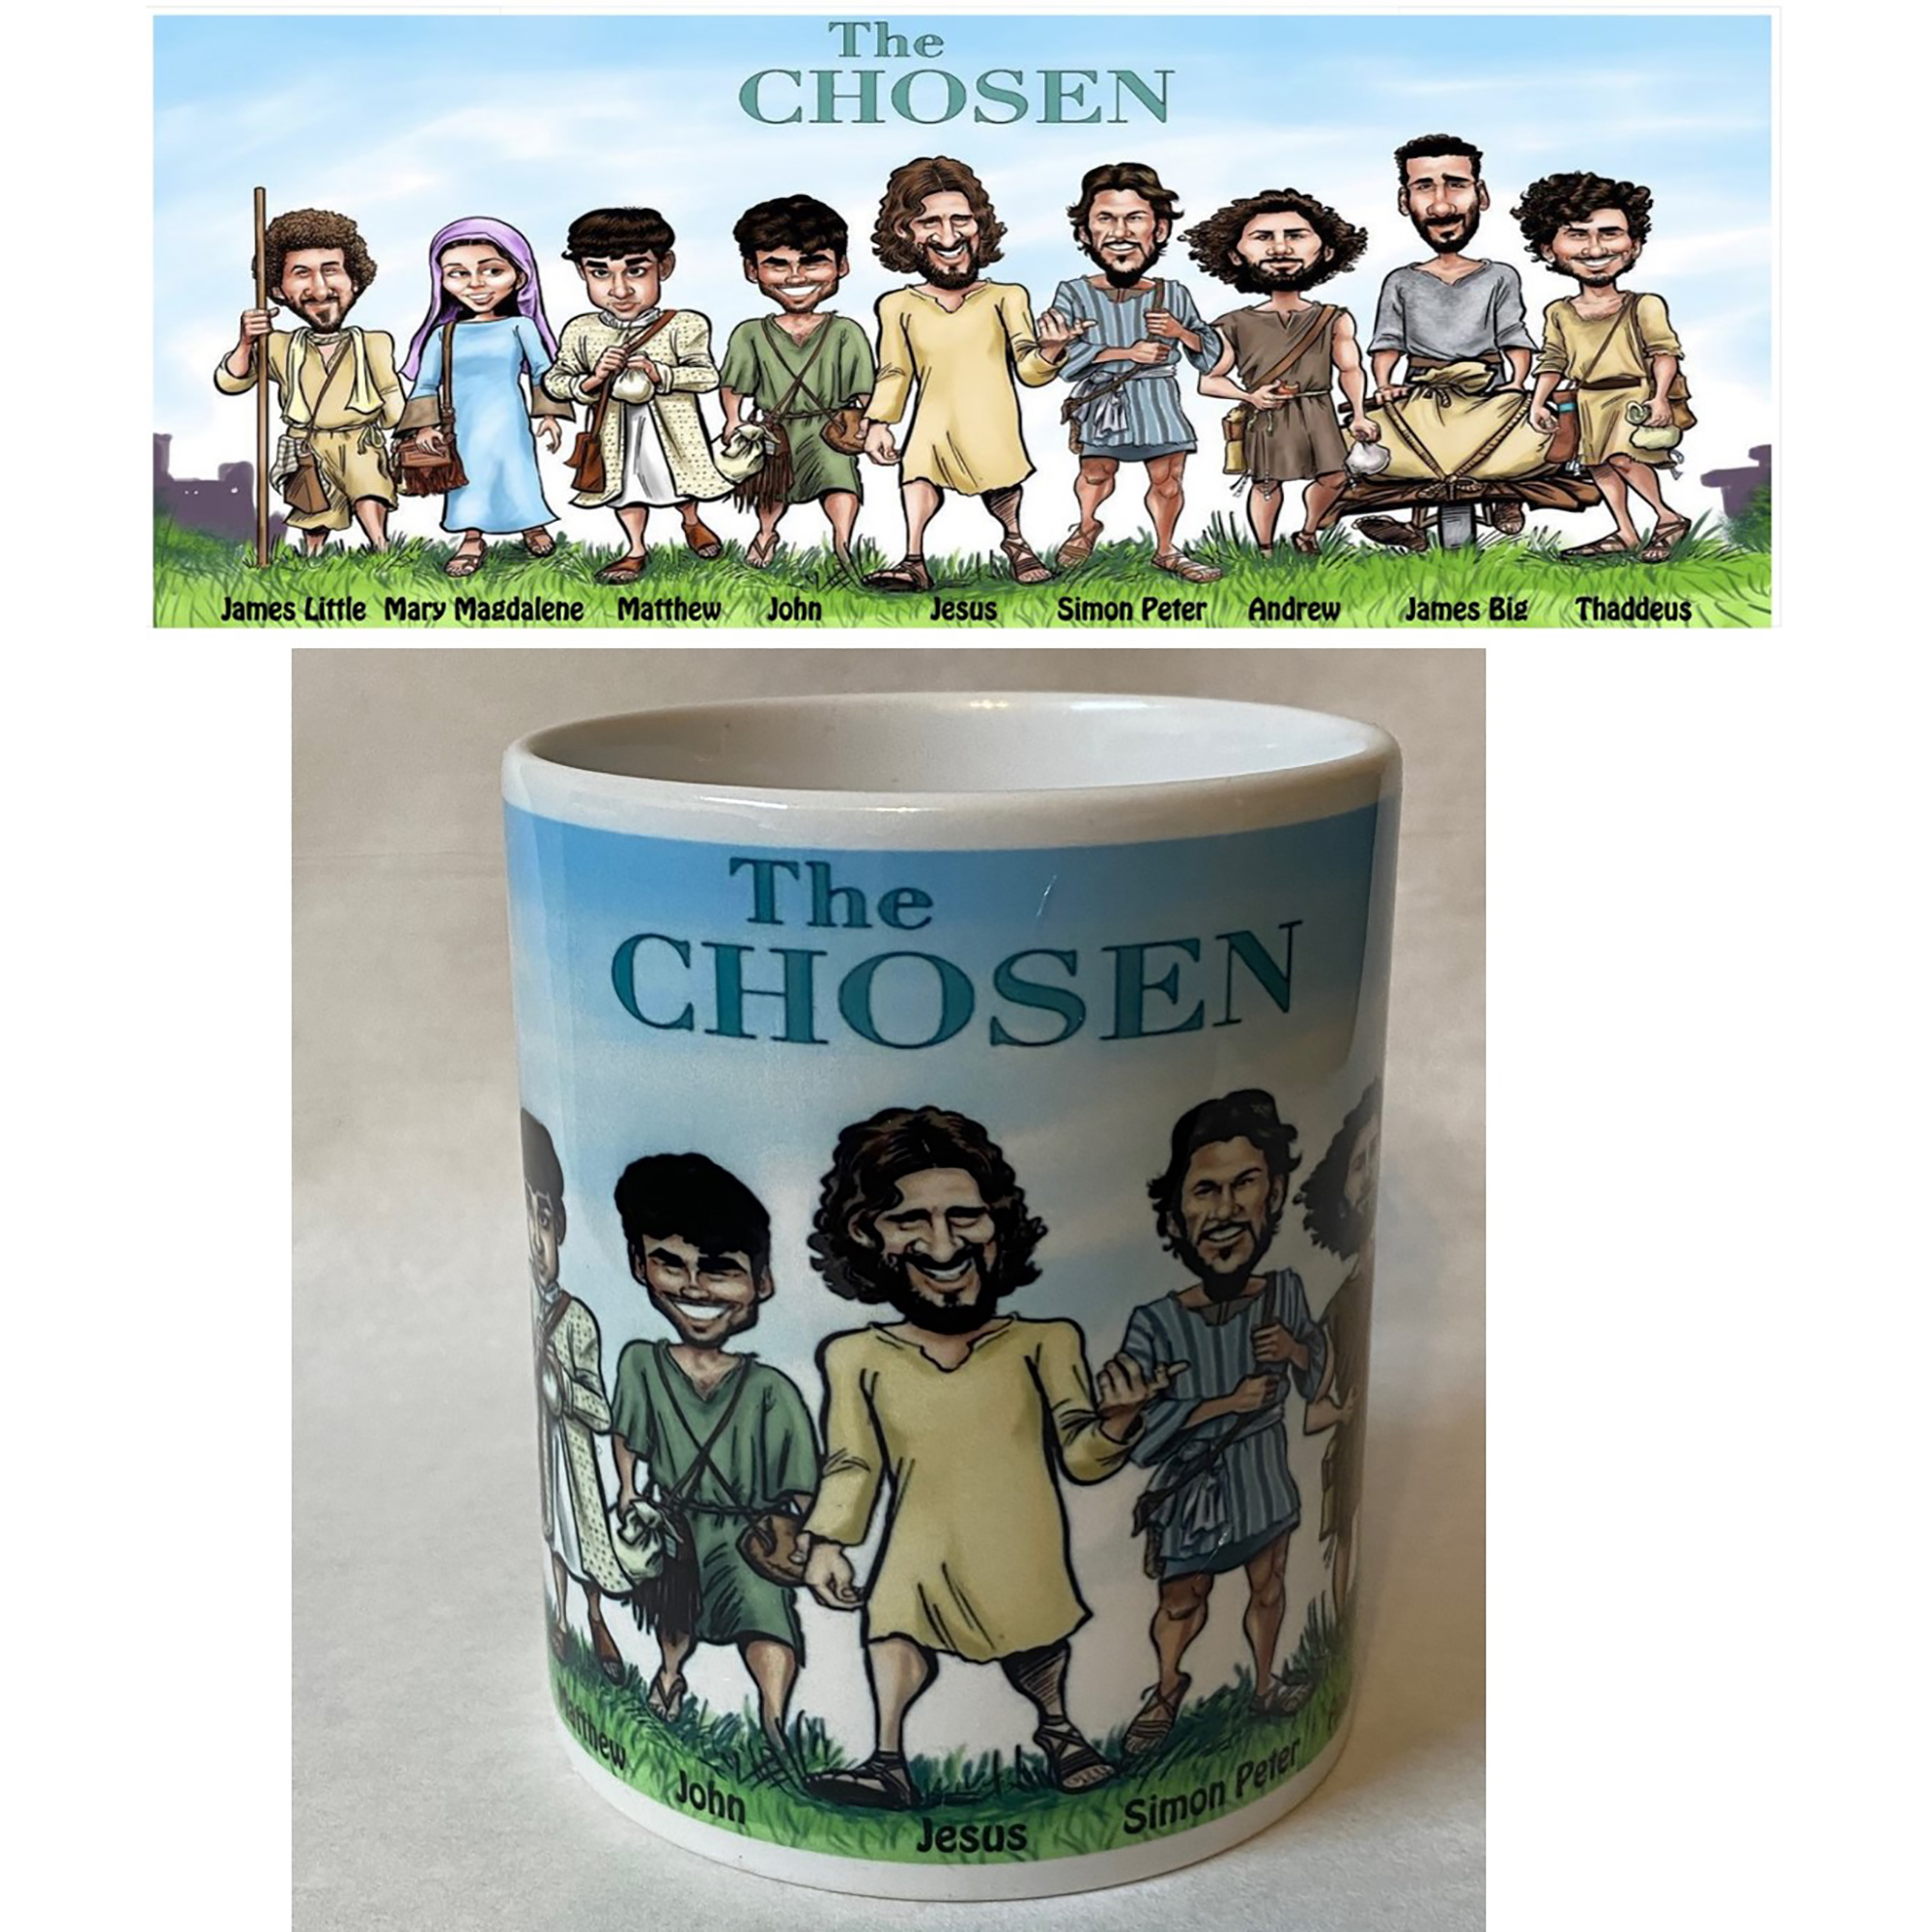 The Chosen coffee mug